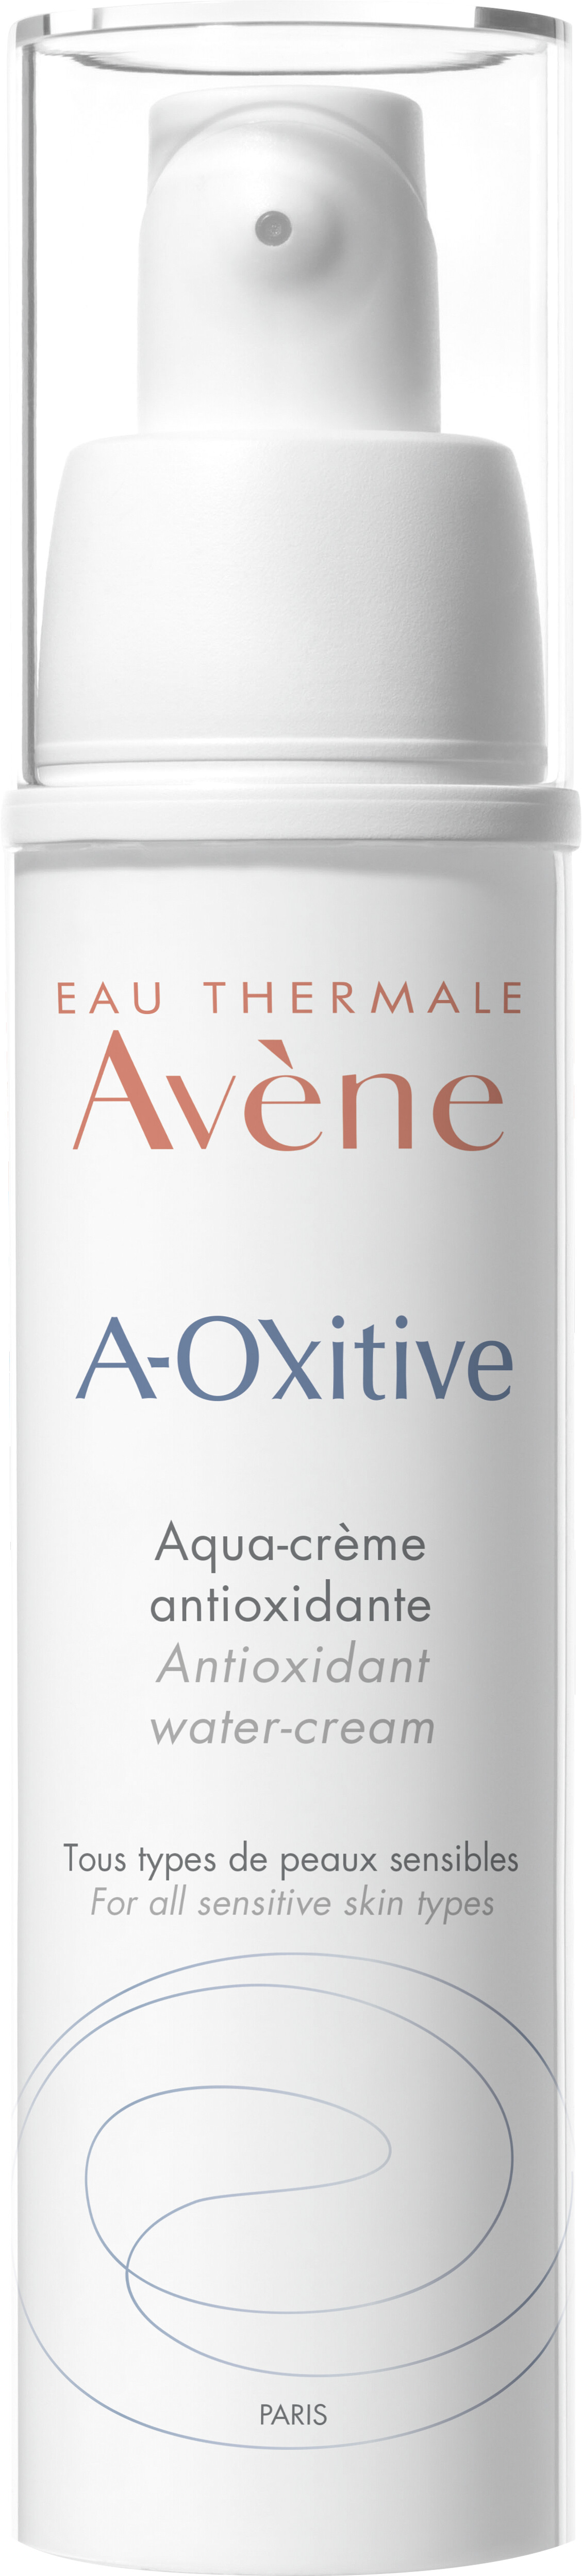 Avene A-Oxitive Antioxidant Water-Cream 30ml